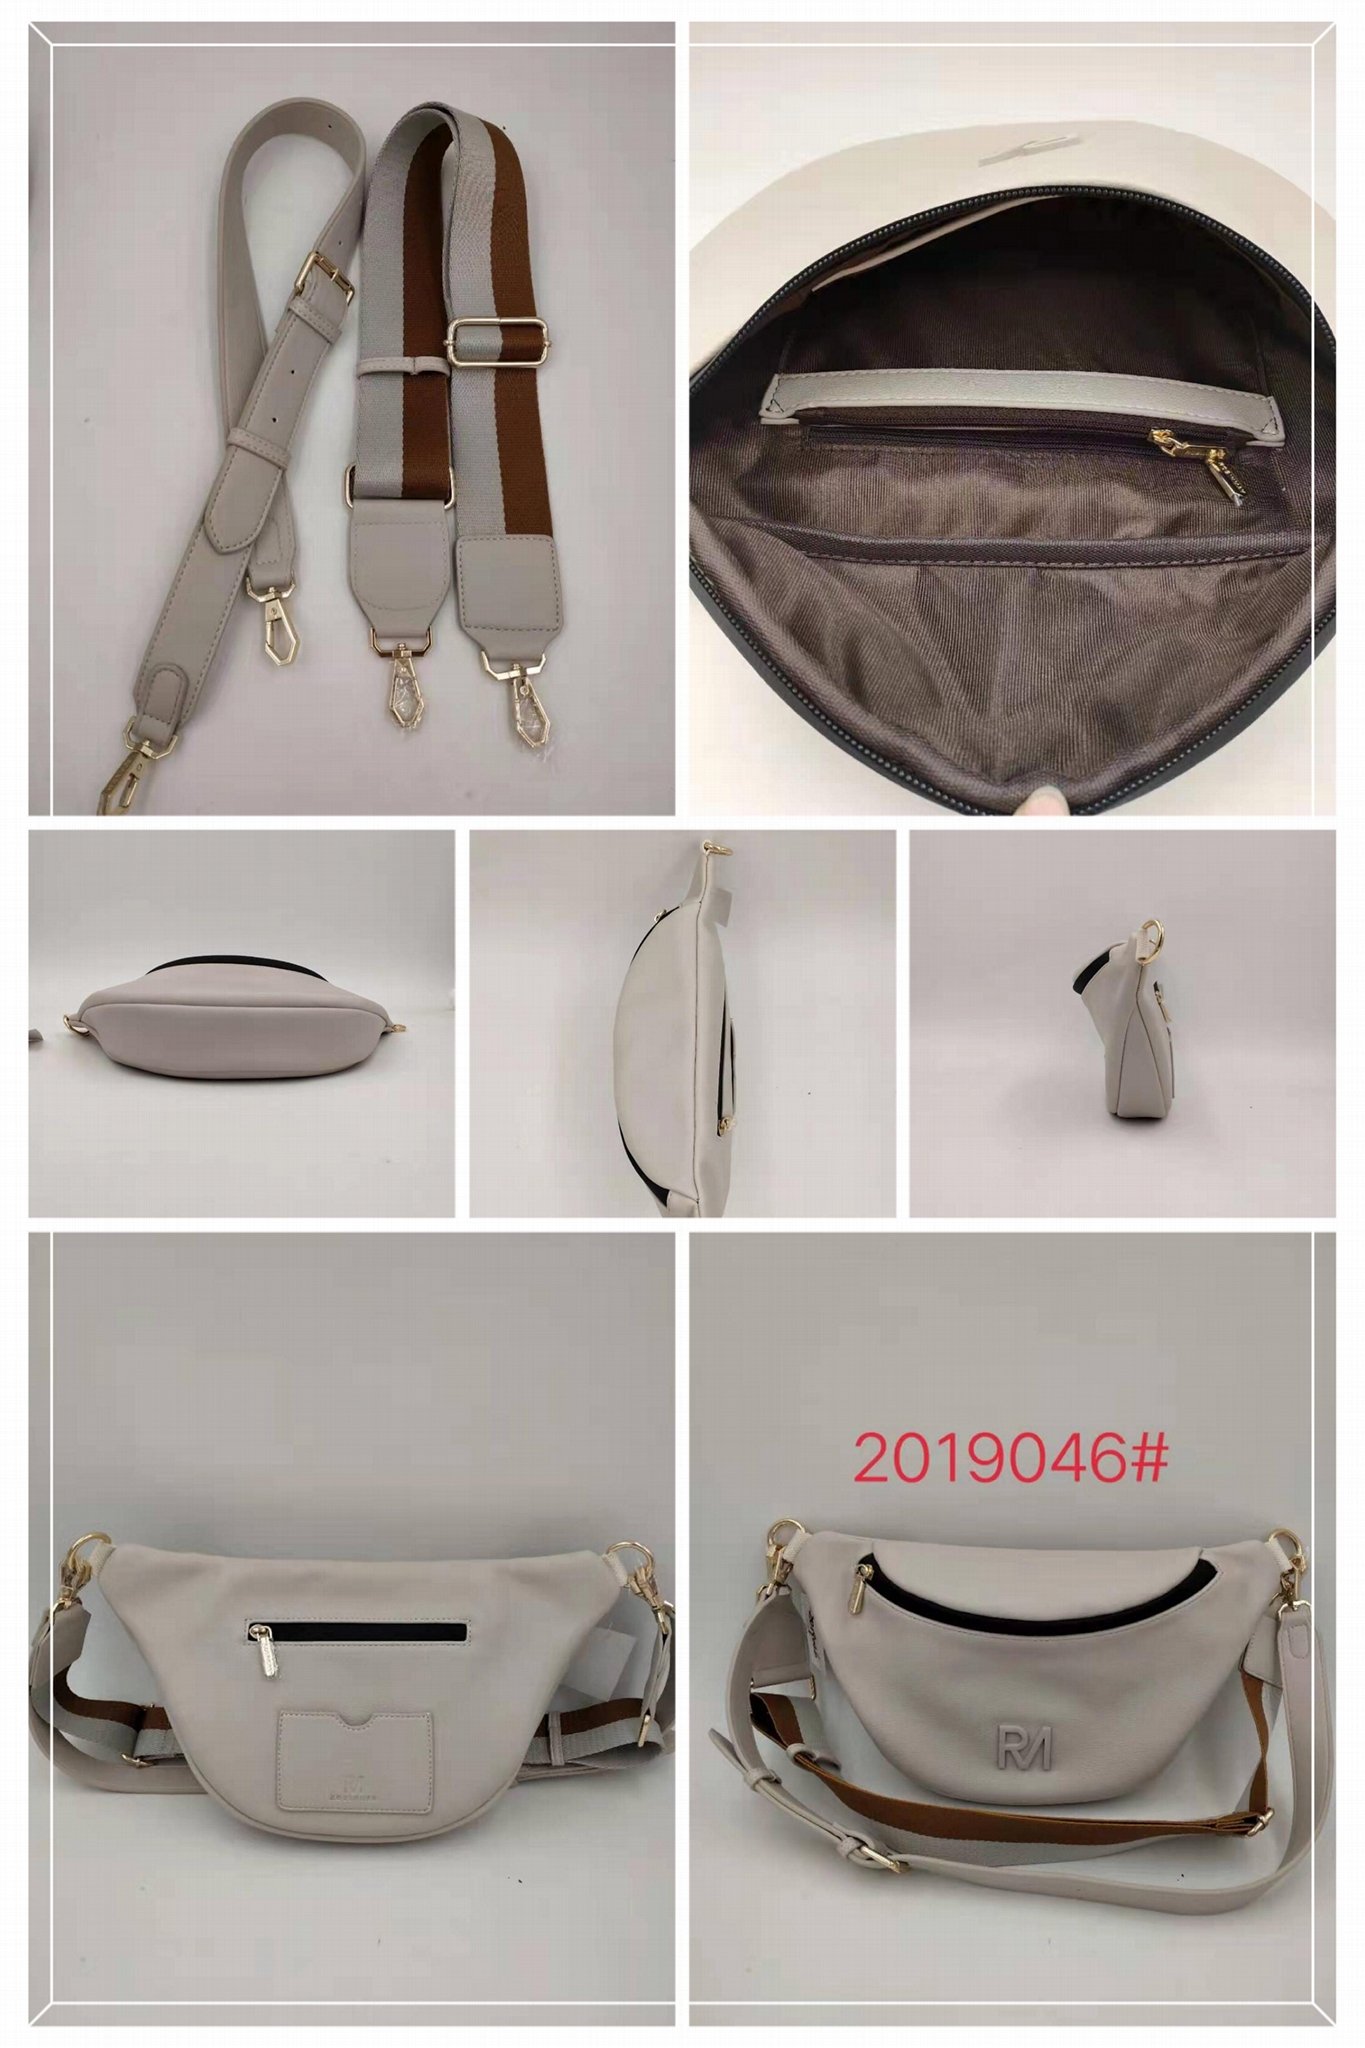 PU Handbags Lady Latest Styles Fanny Bag High quality